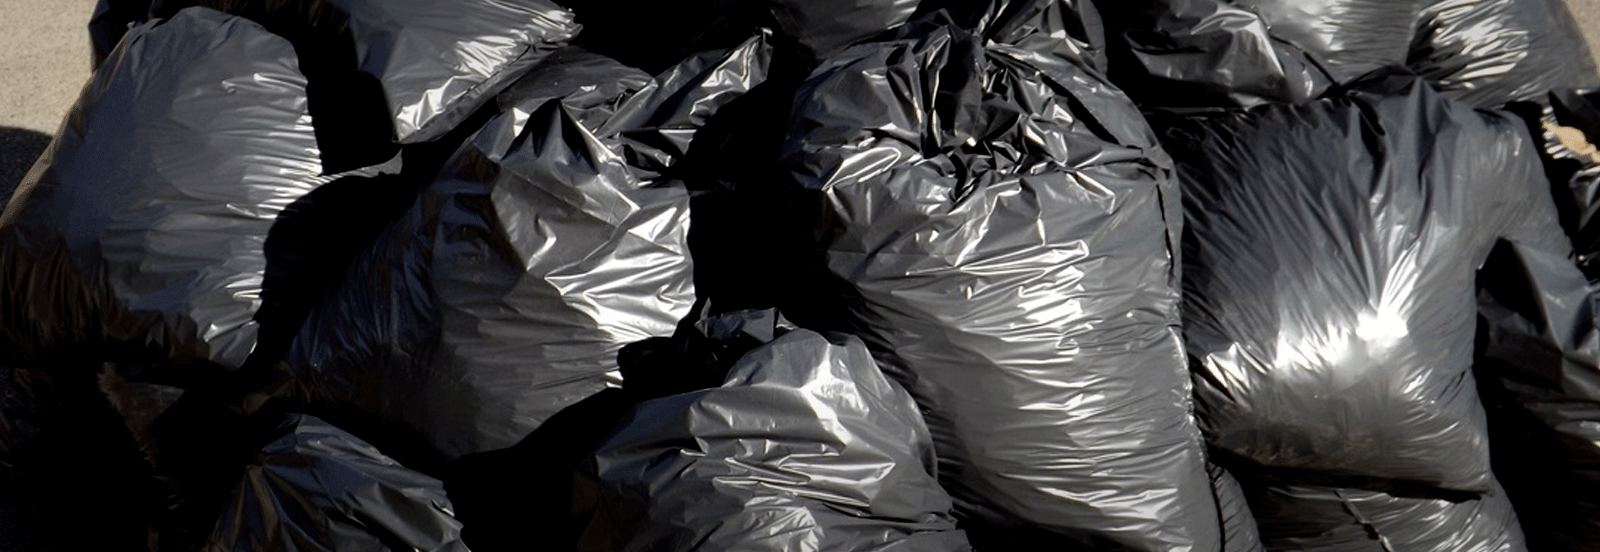 Bin bags and black rubbish sacks